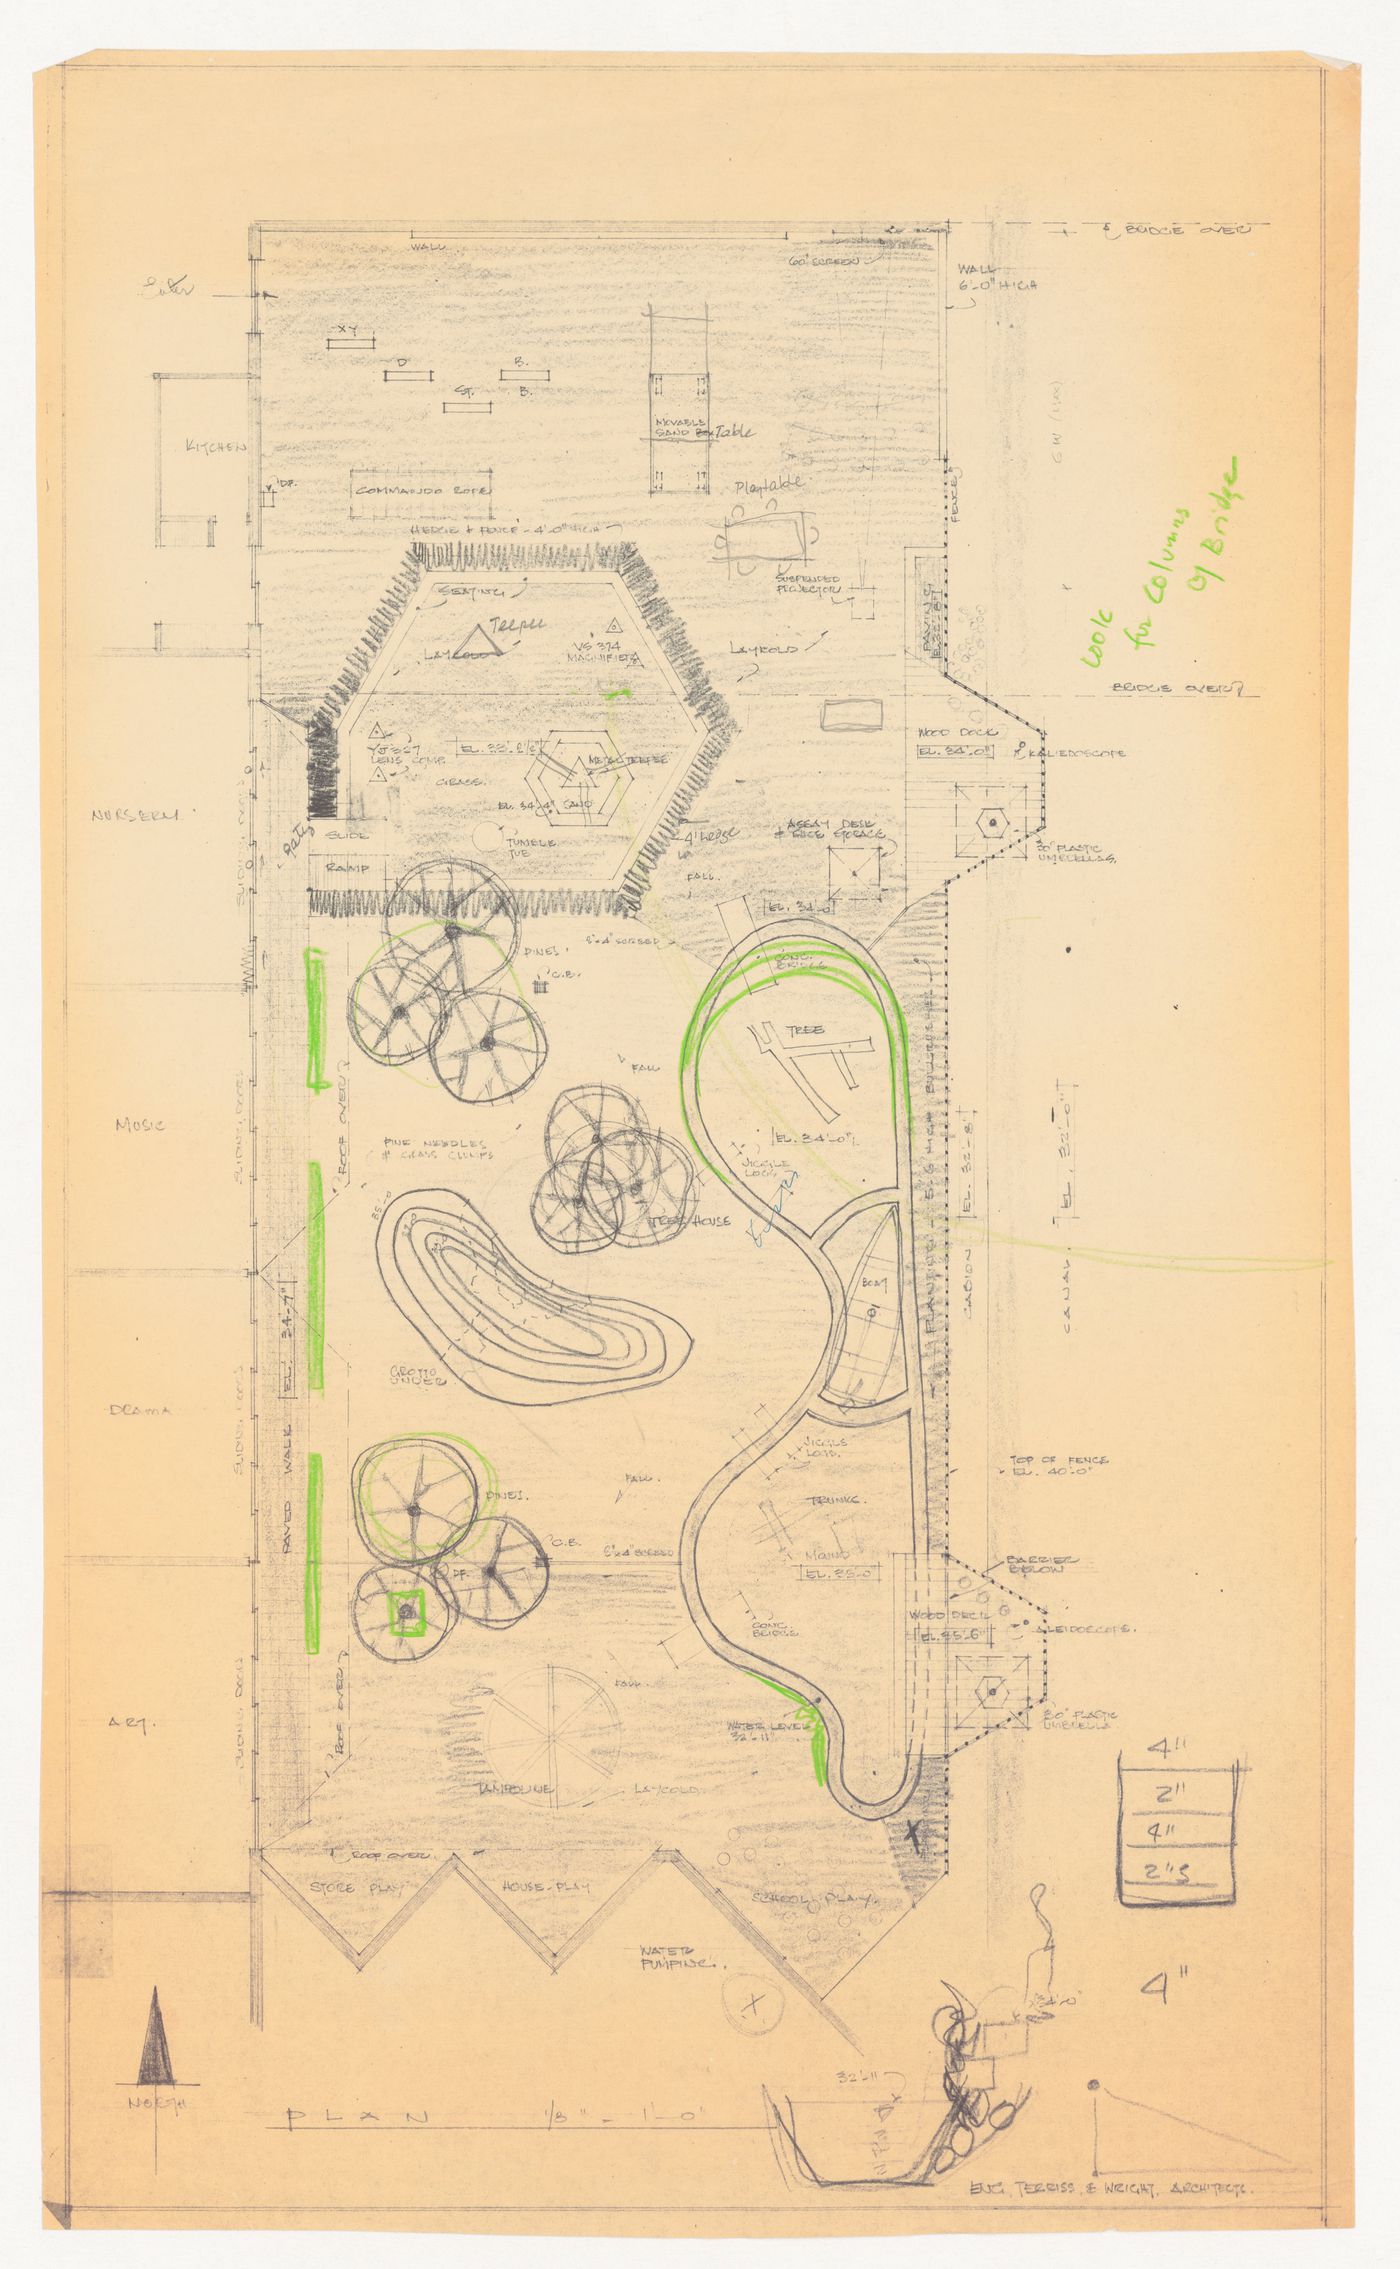 Plan with annotations for Children's Creative Centre Playground, Canadian Federal Pavilion, Expo '67, Montréal, Québec